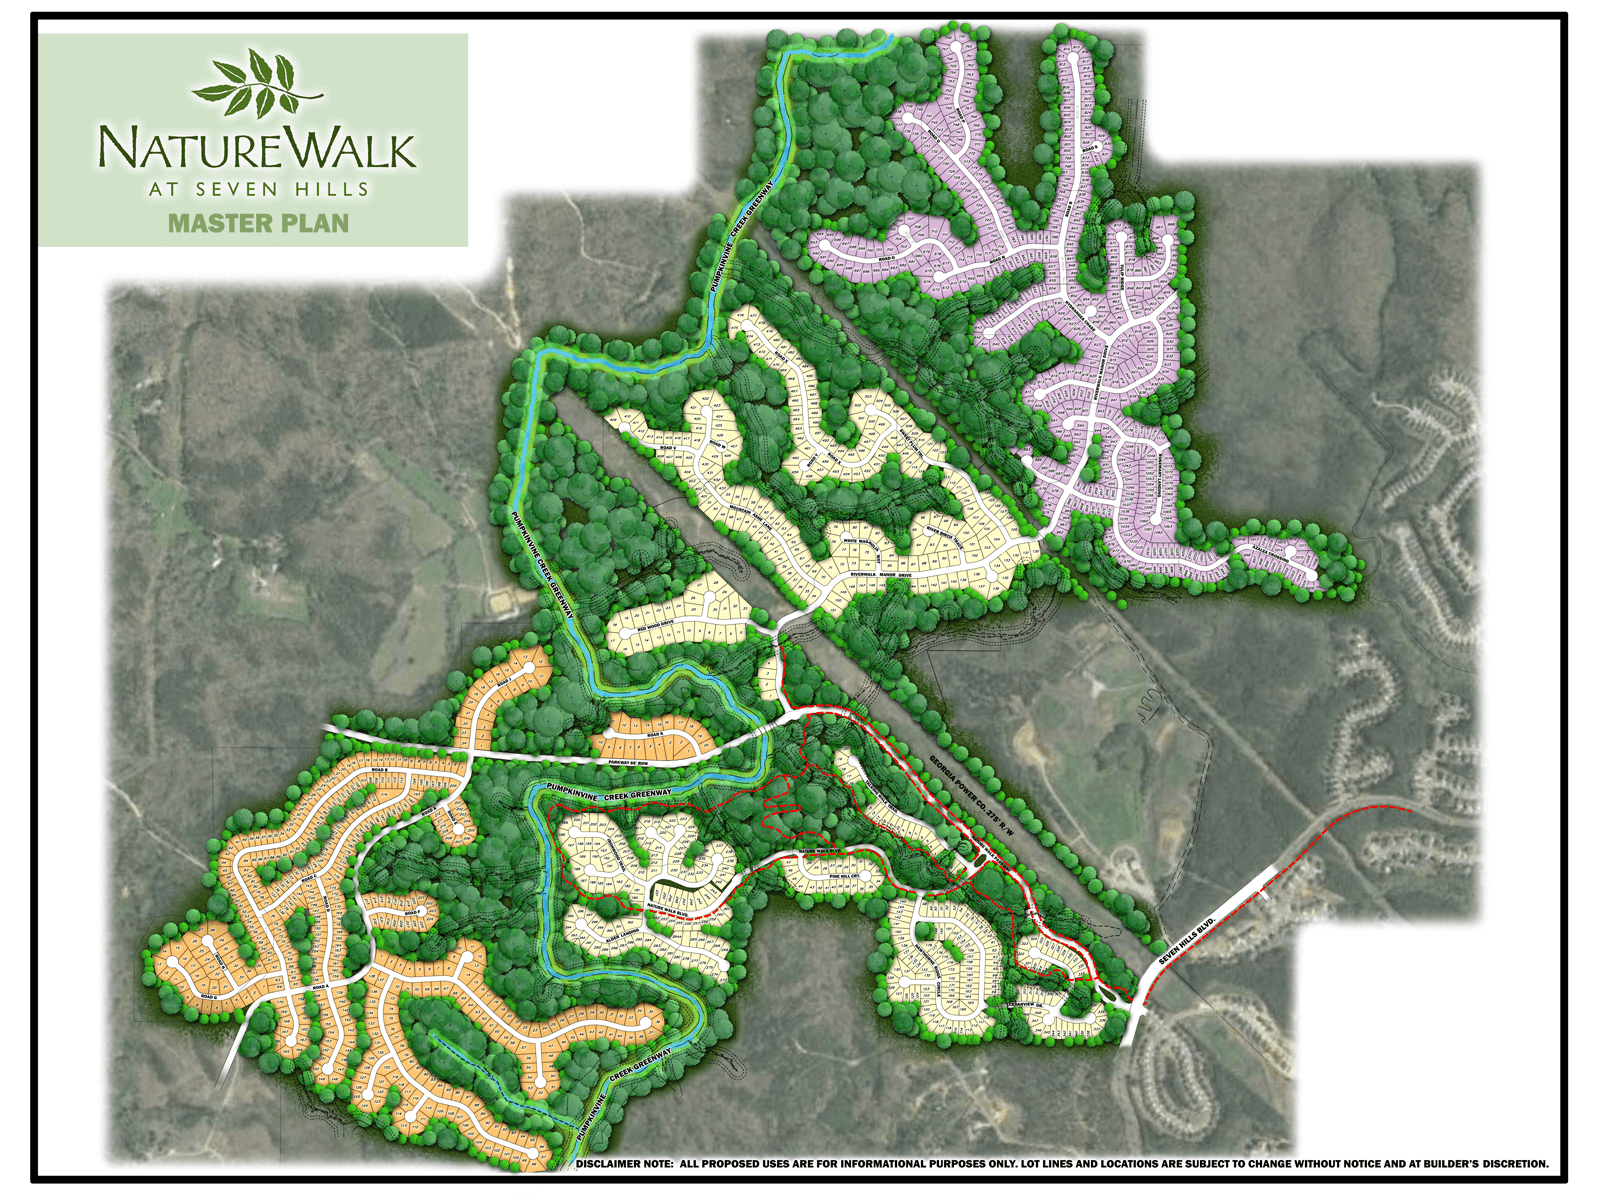 the master plan for NatureWalk at Seven Hills